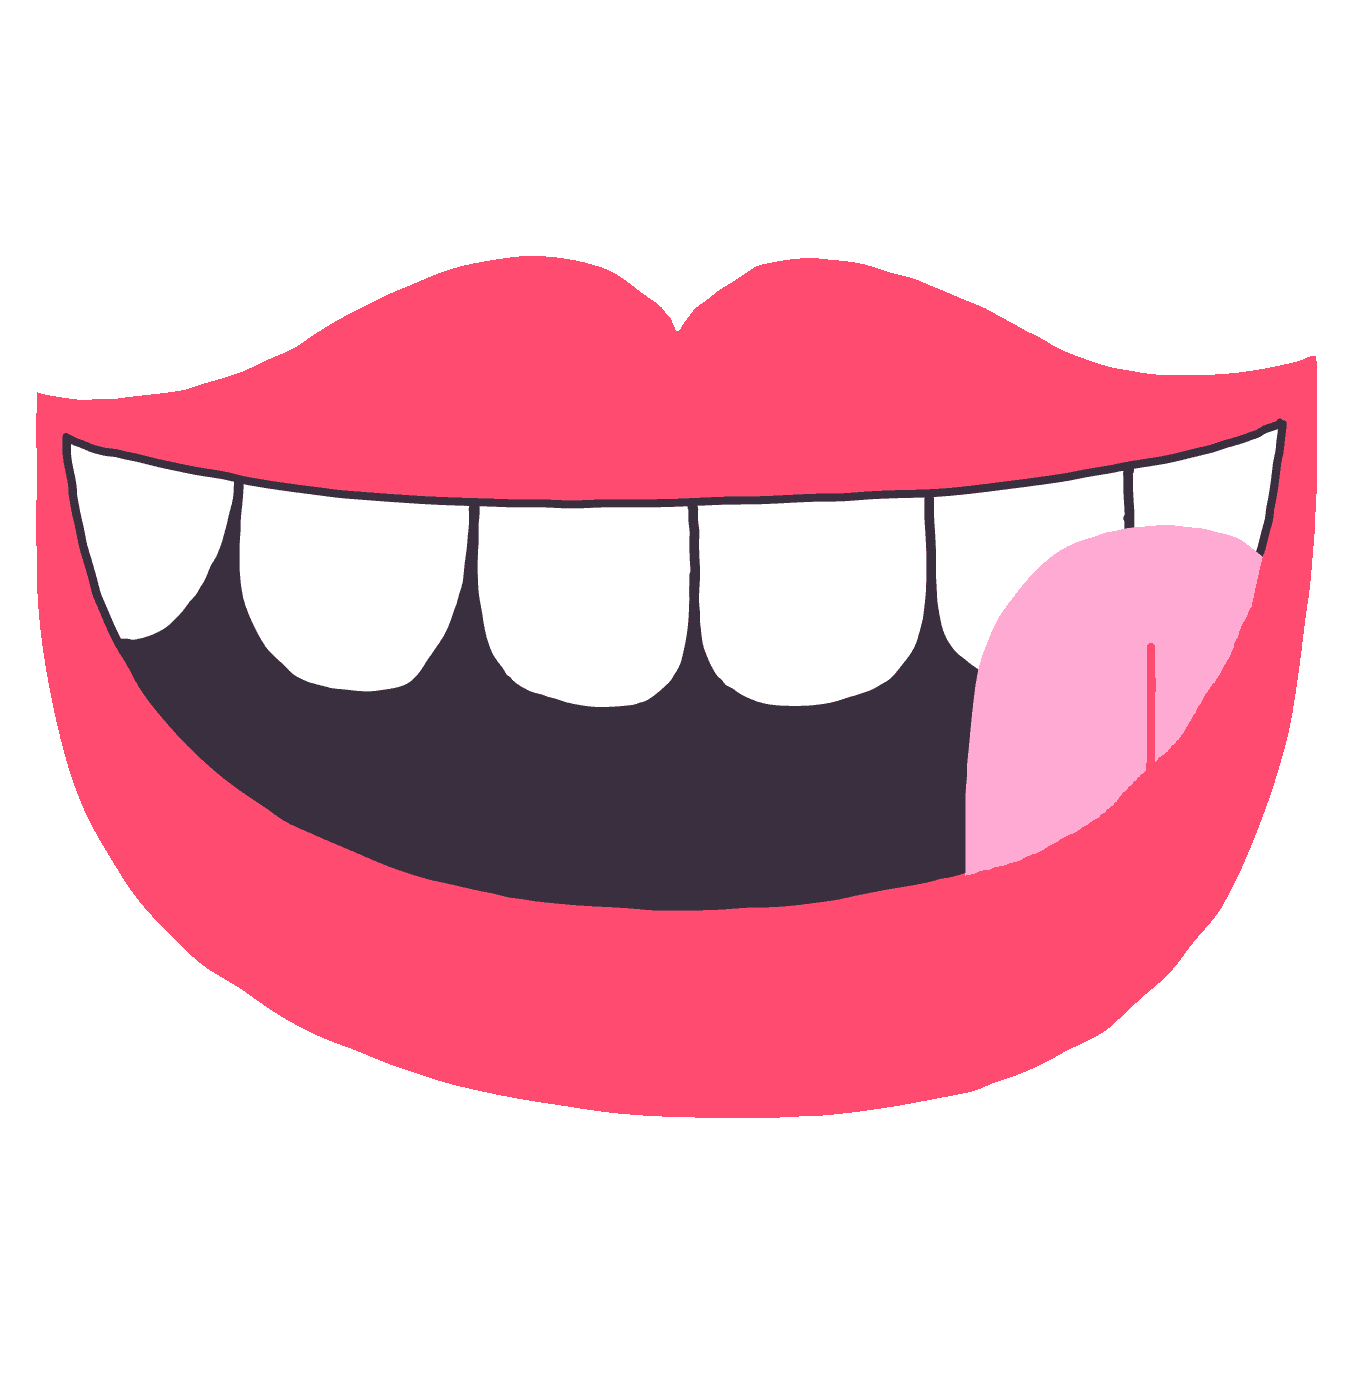 Lips Tongue Sticker by Tim Lahan